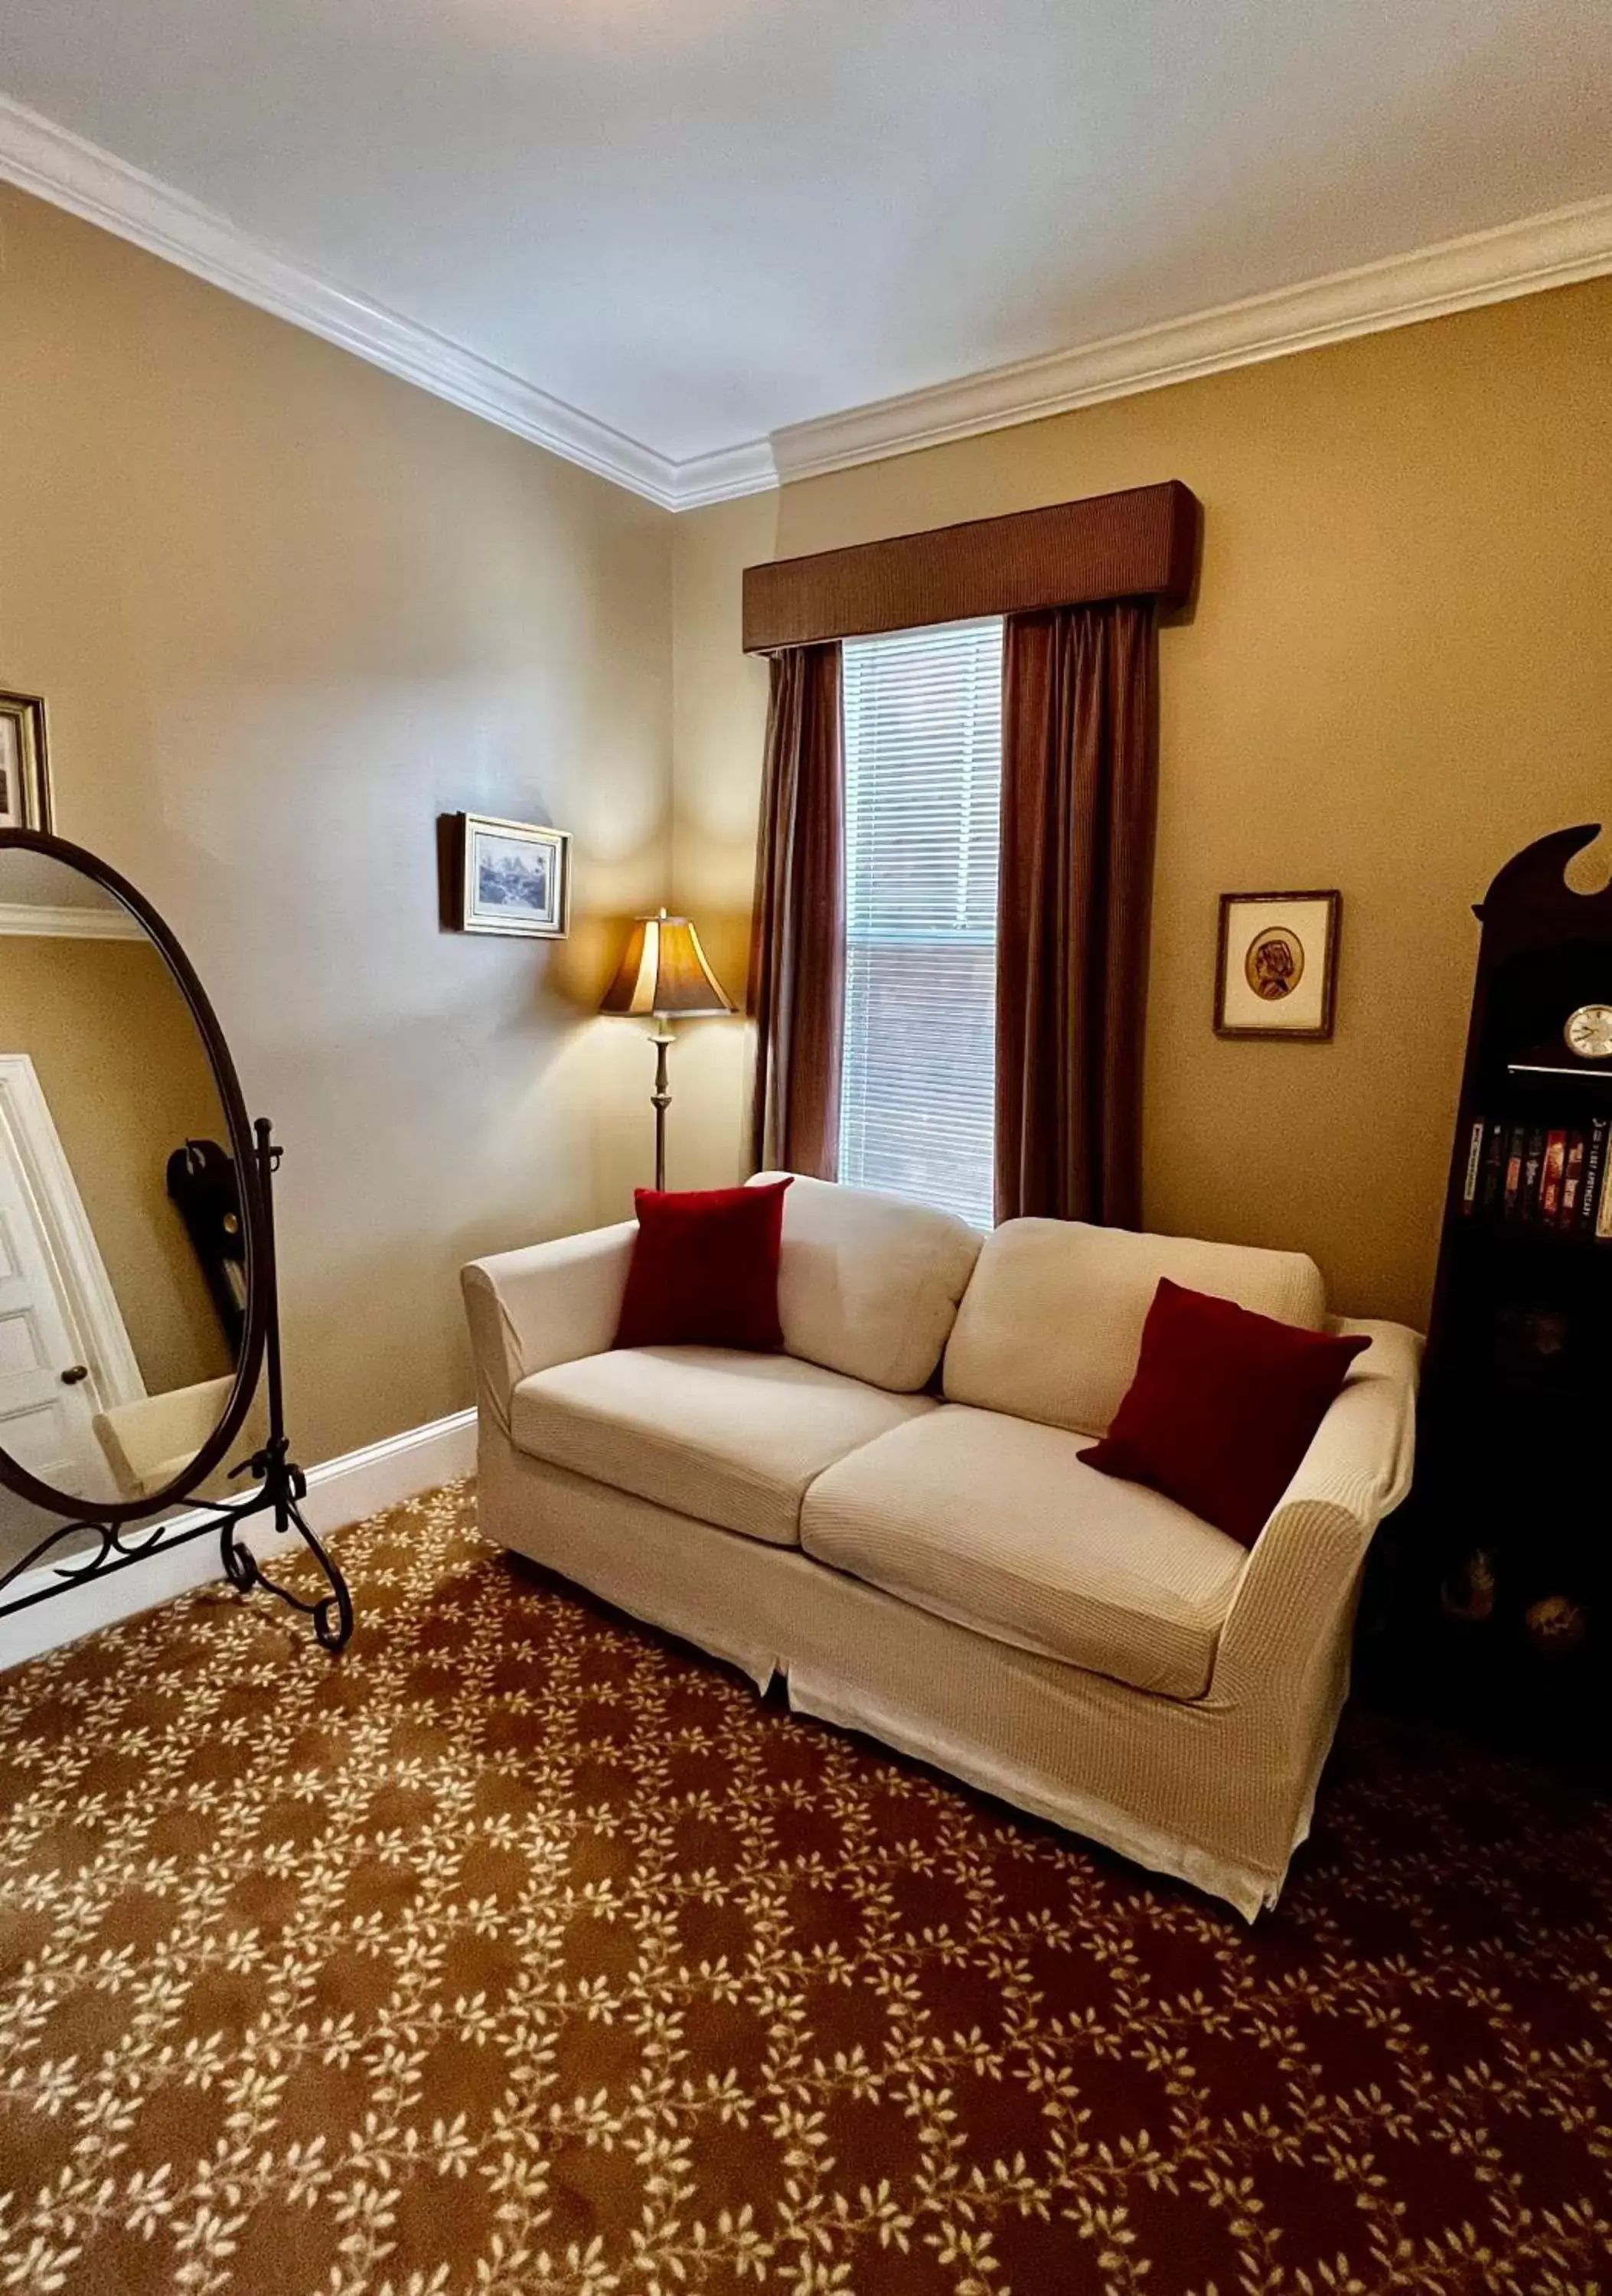 Bedroom, Seating Area in Almondy Inn Bed & Breakfast